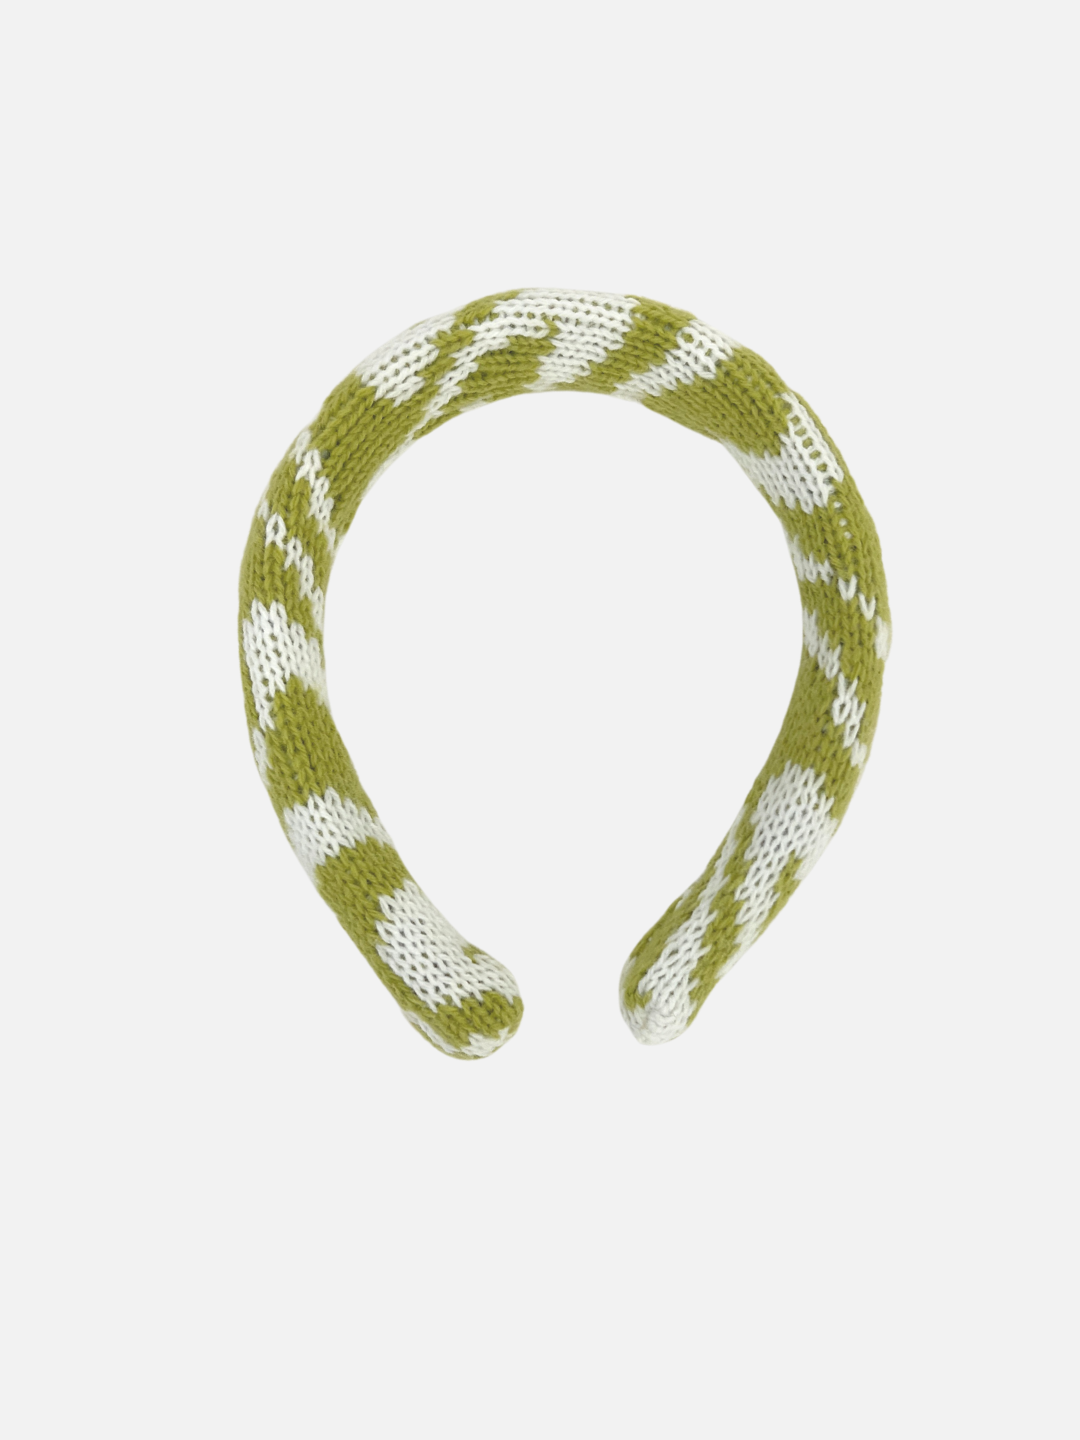 Green/White Swirl | A kids' knitted headband in swirls of pale green and white